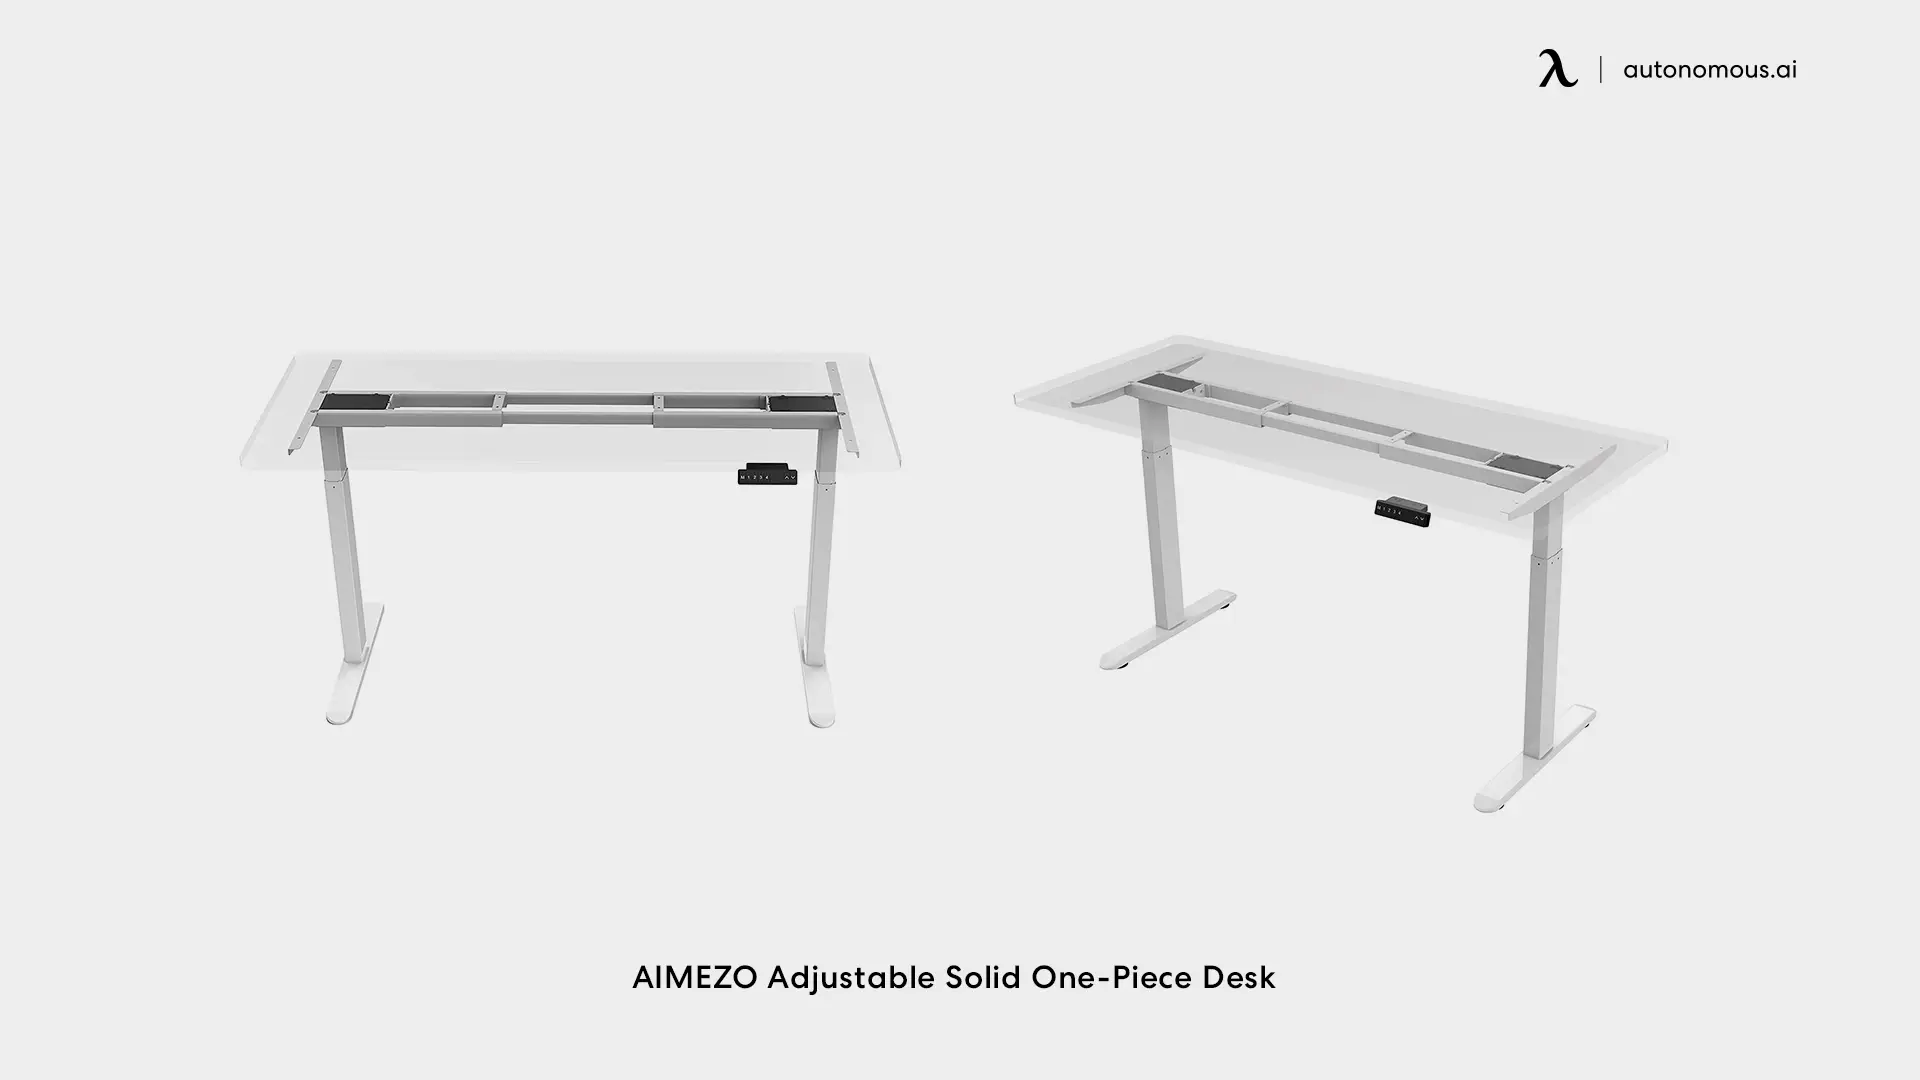 AIMEZO Adjustable Solid One-Piece Desk - DIY desk plans